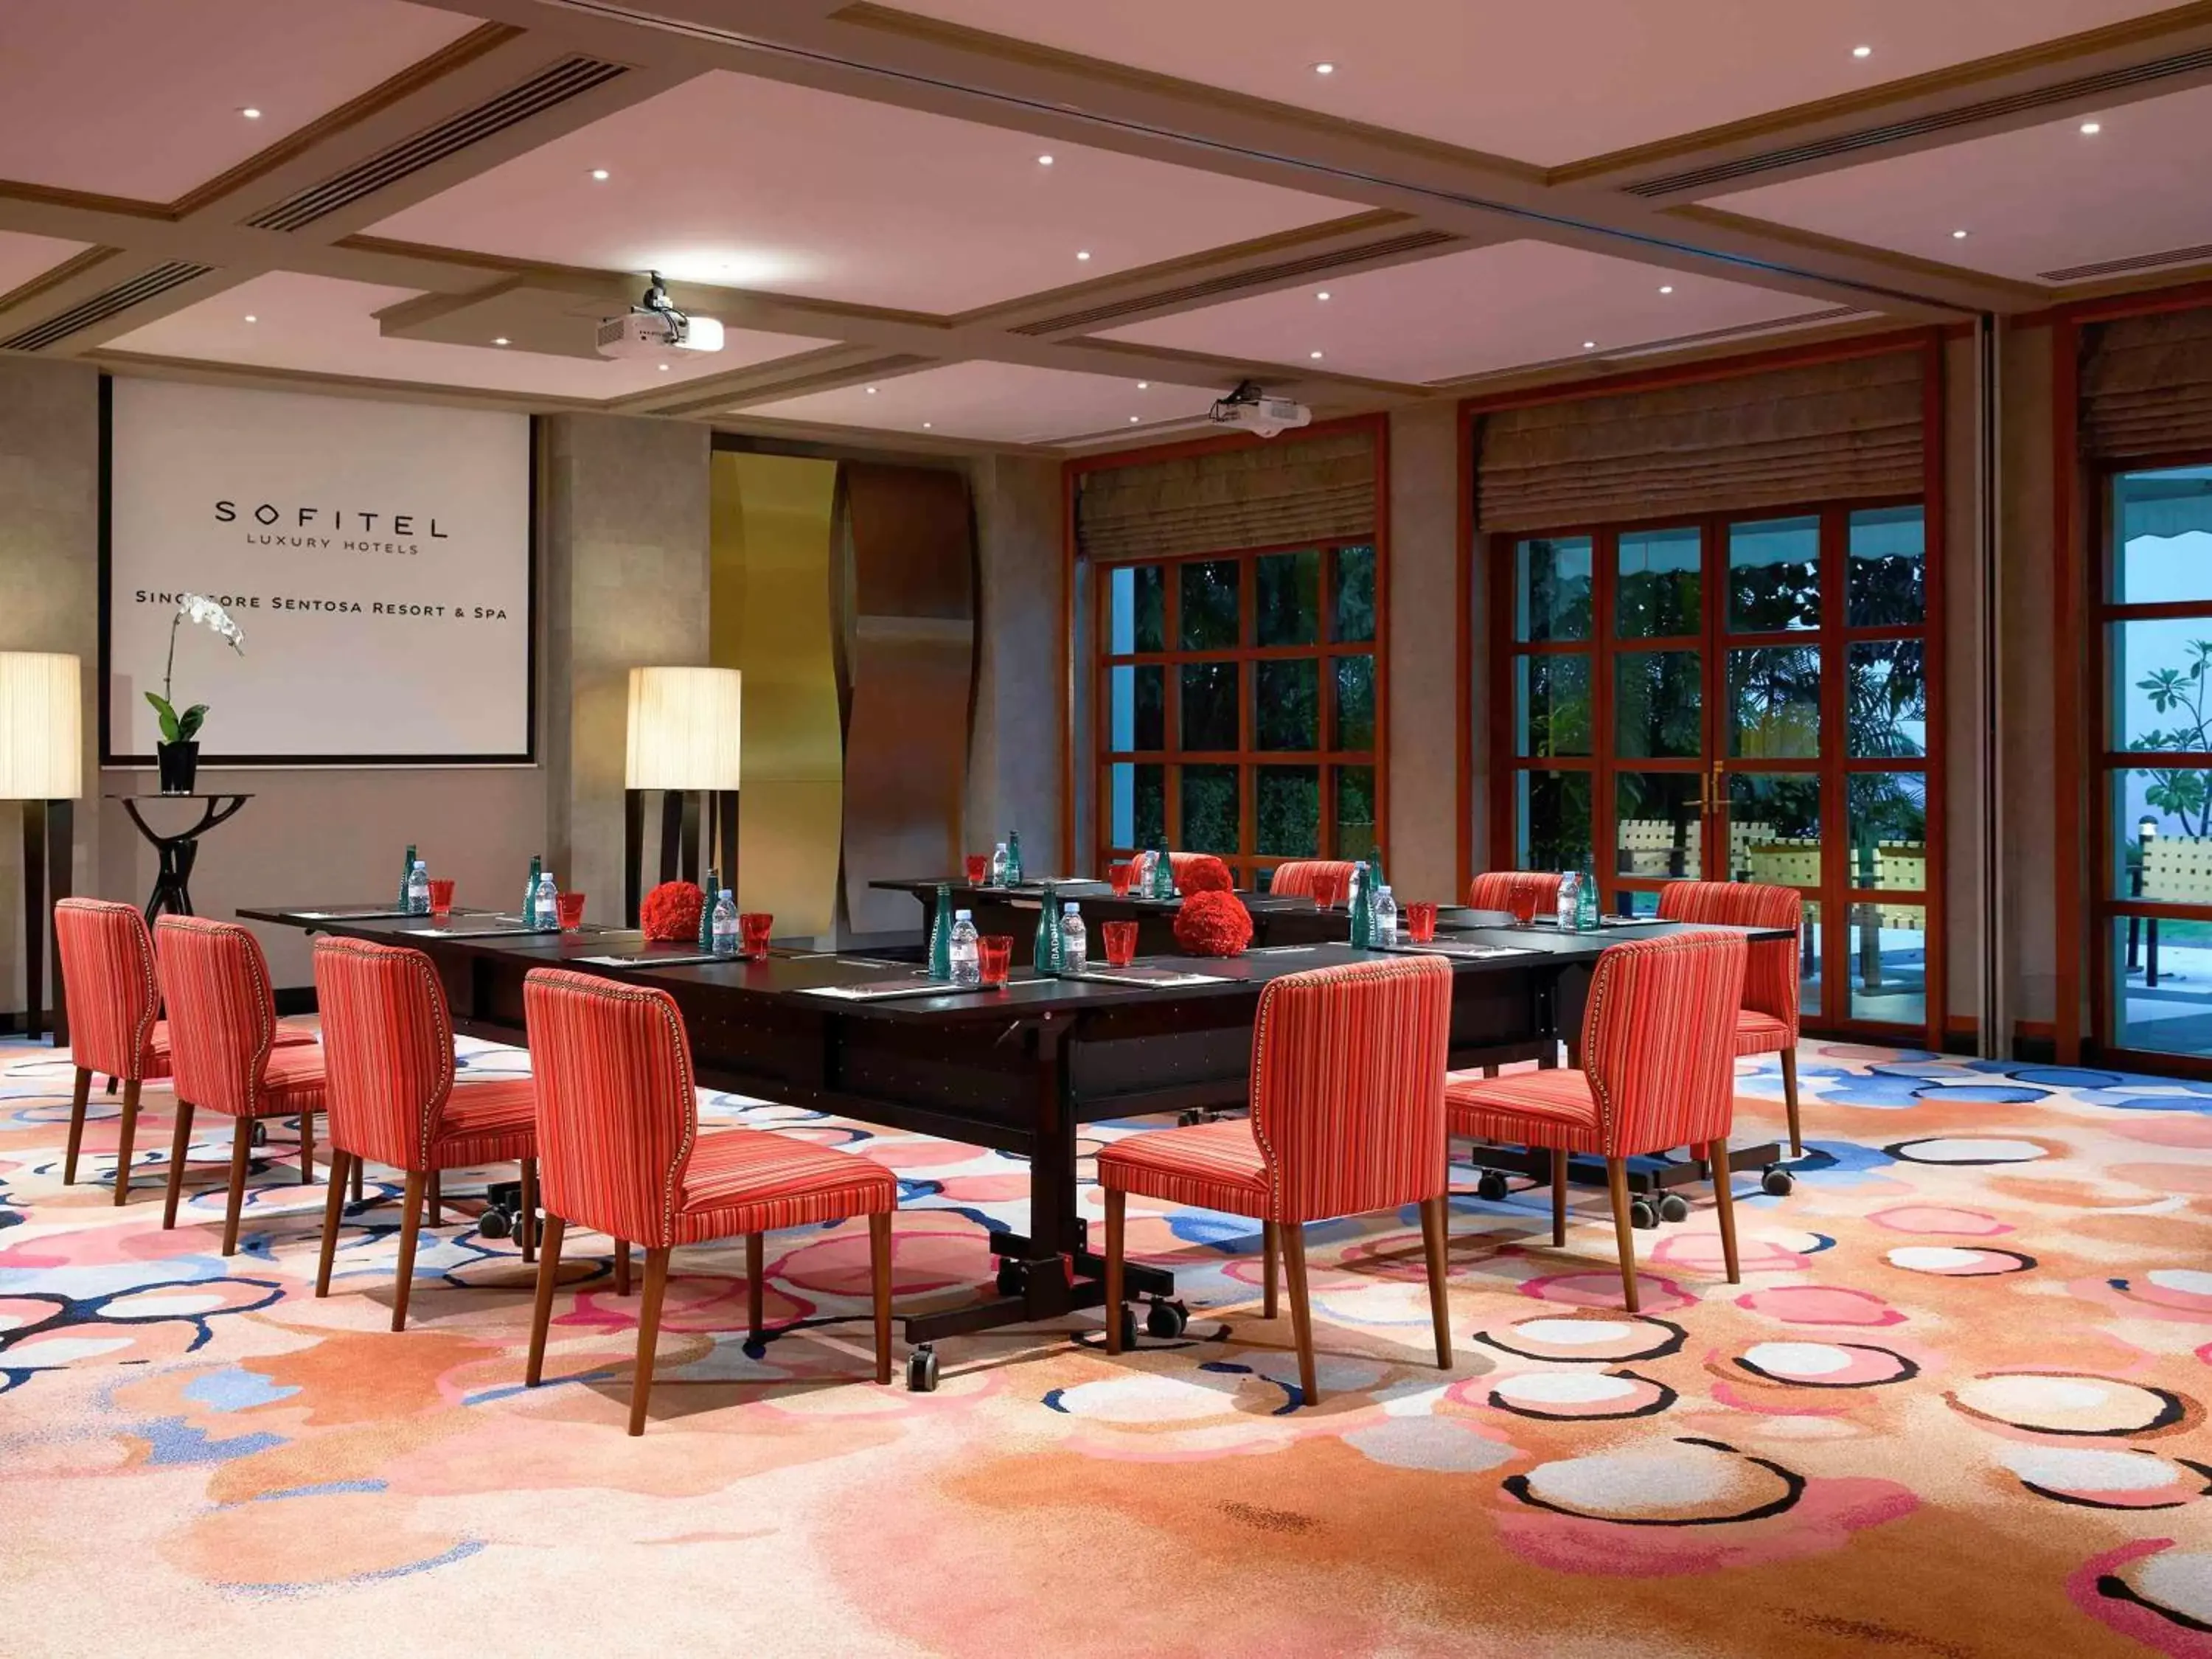 On site, Restaurant/Places to Eat in Sofitel Singapore Sentosa Resort & Spa